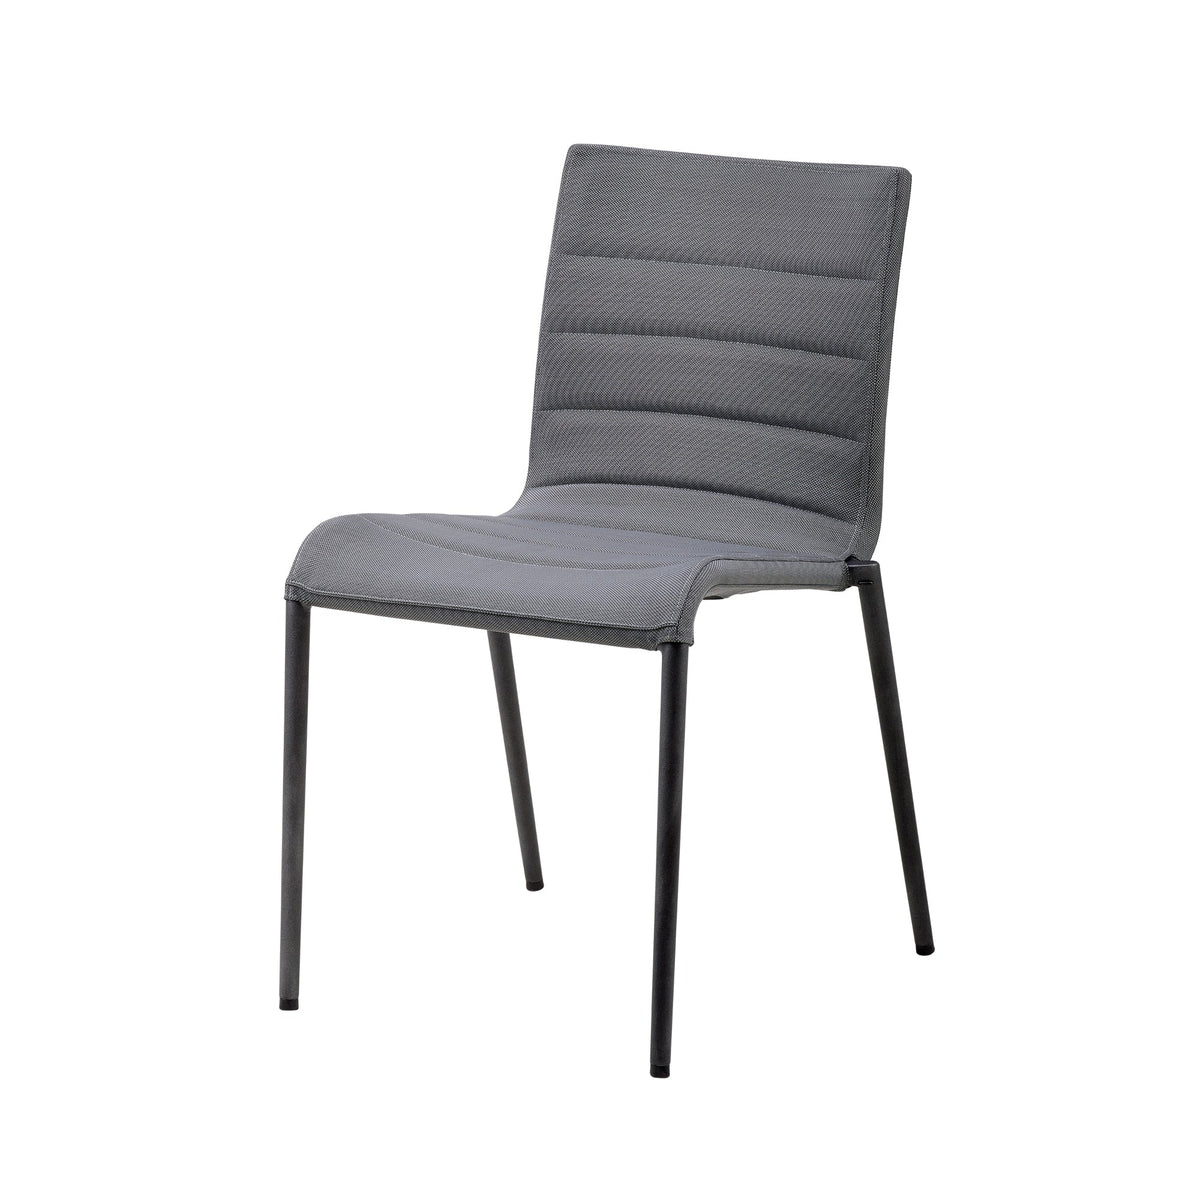 Cane-line Core tuoli harmaa - Laatukaluste